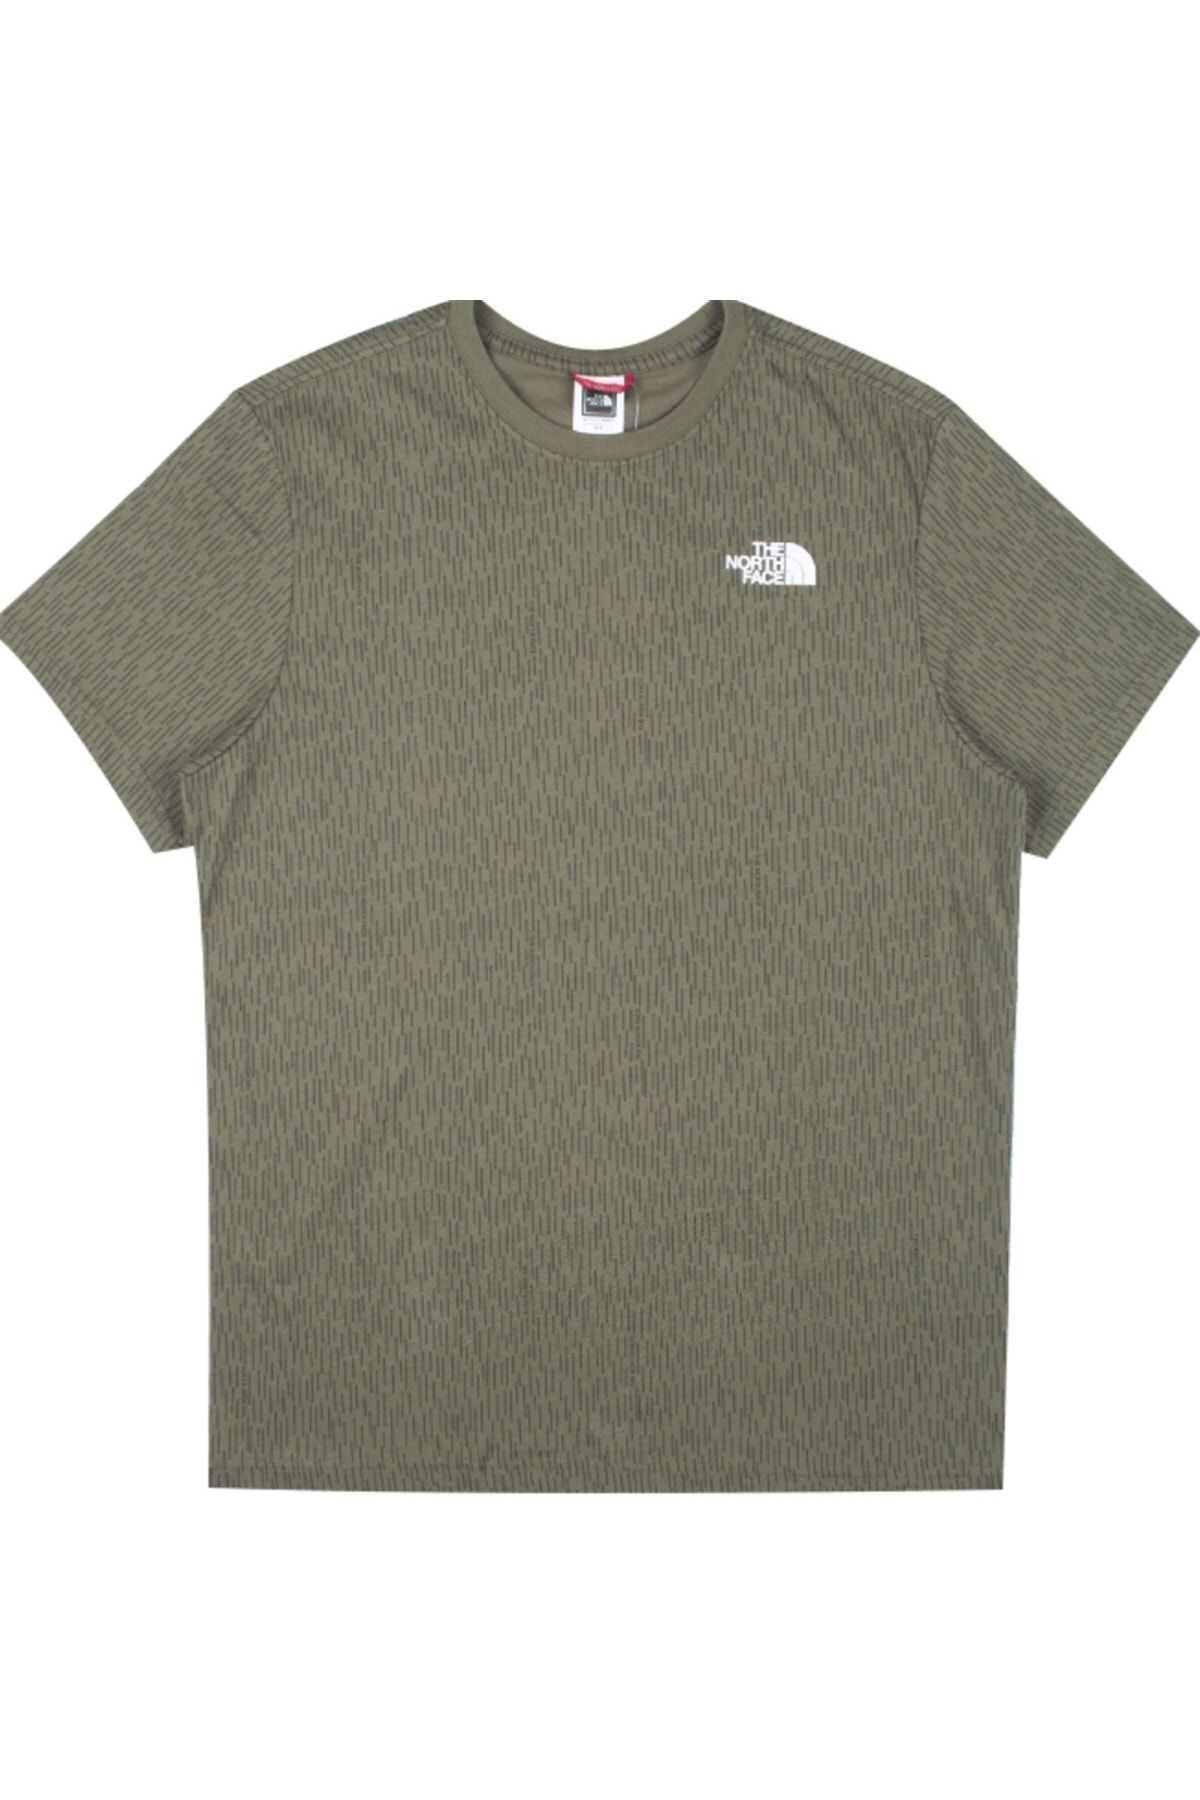 The North Face Redbox Tee - Burnt Olive Green Erkek Tshirt